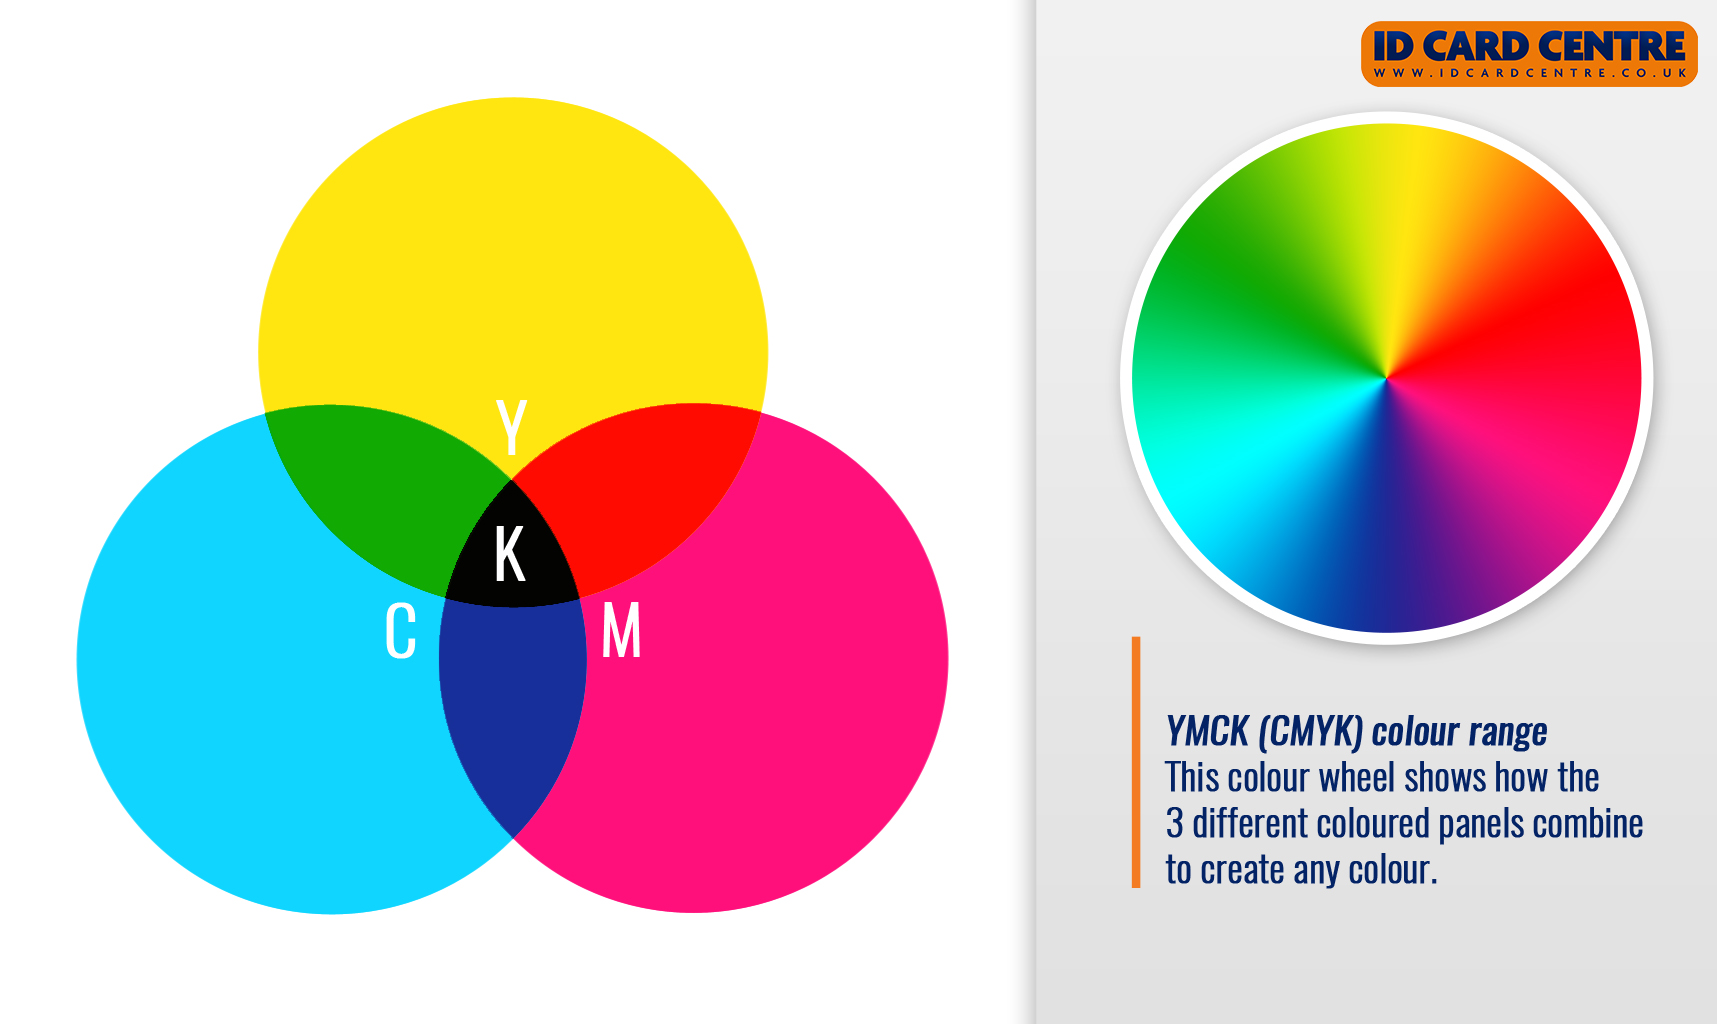 CMYK colour range explained